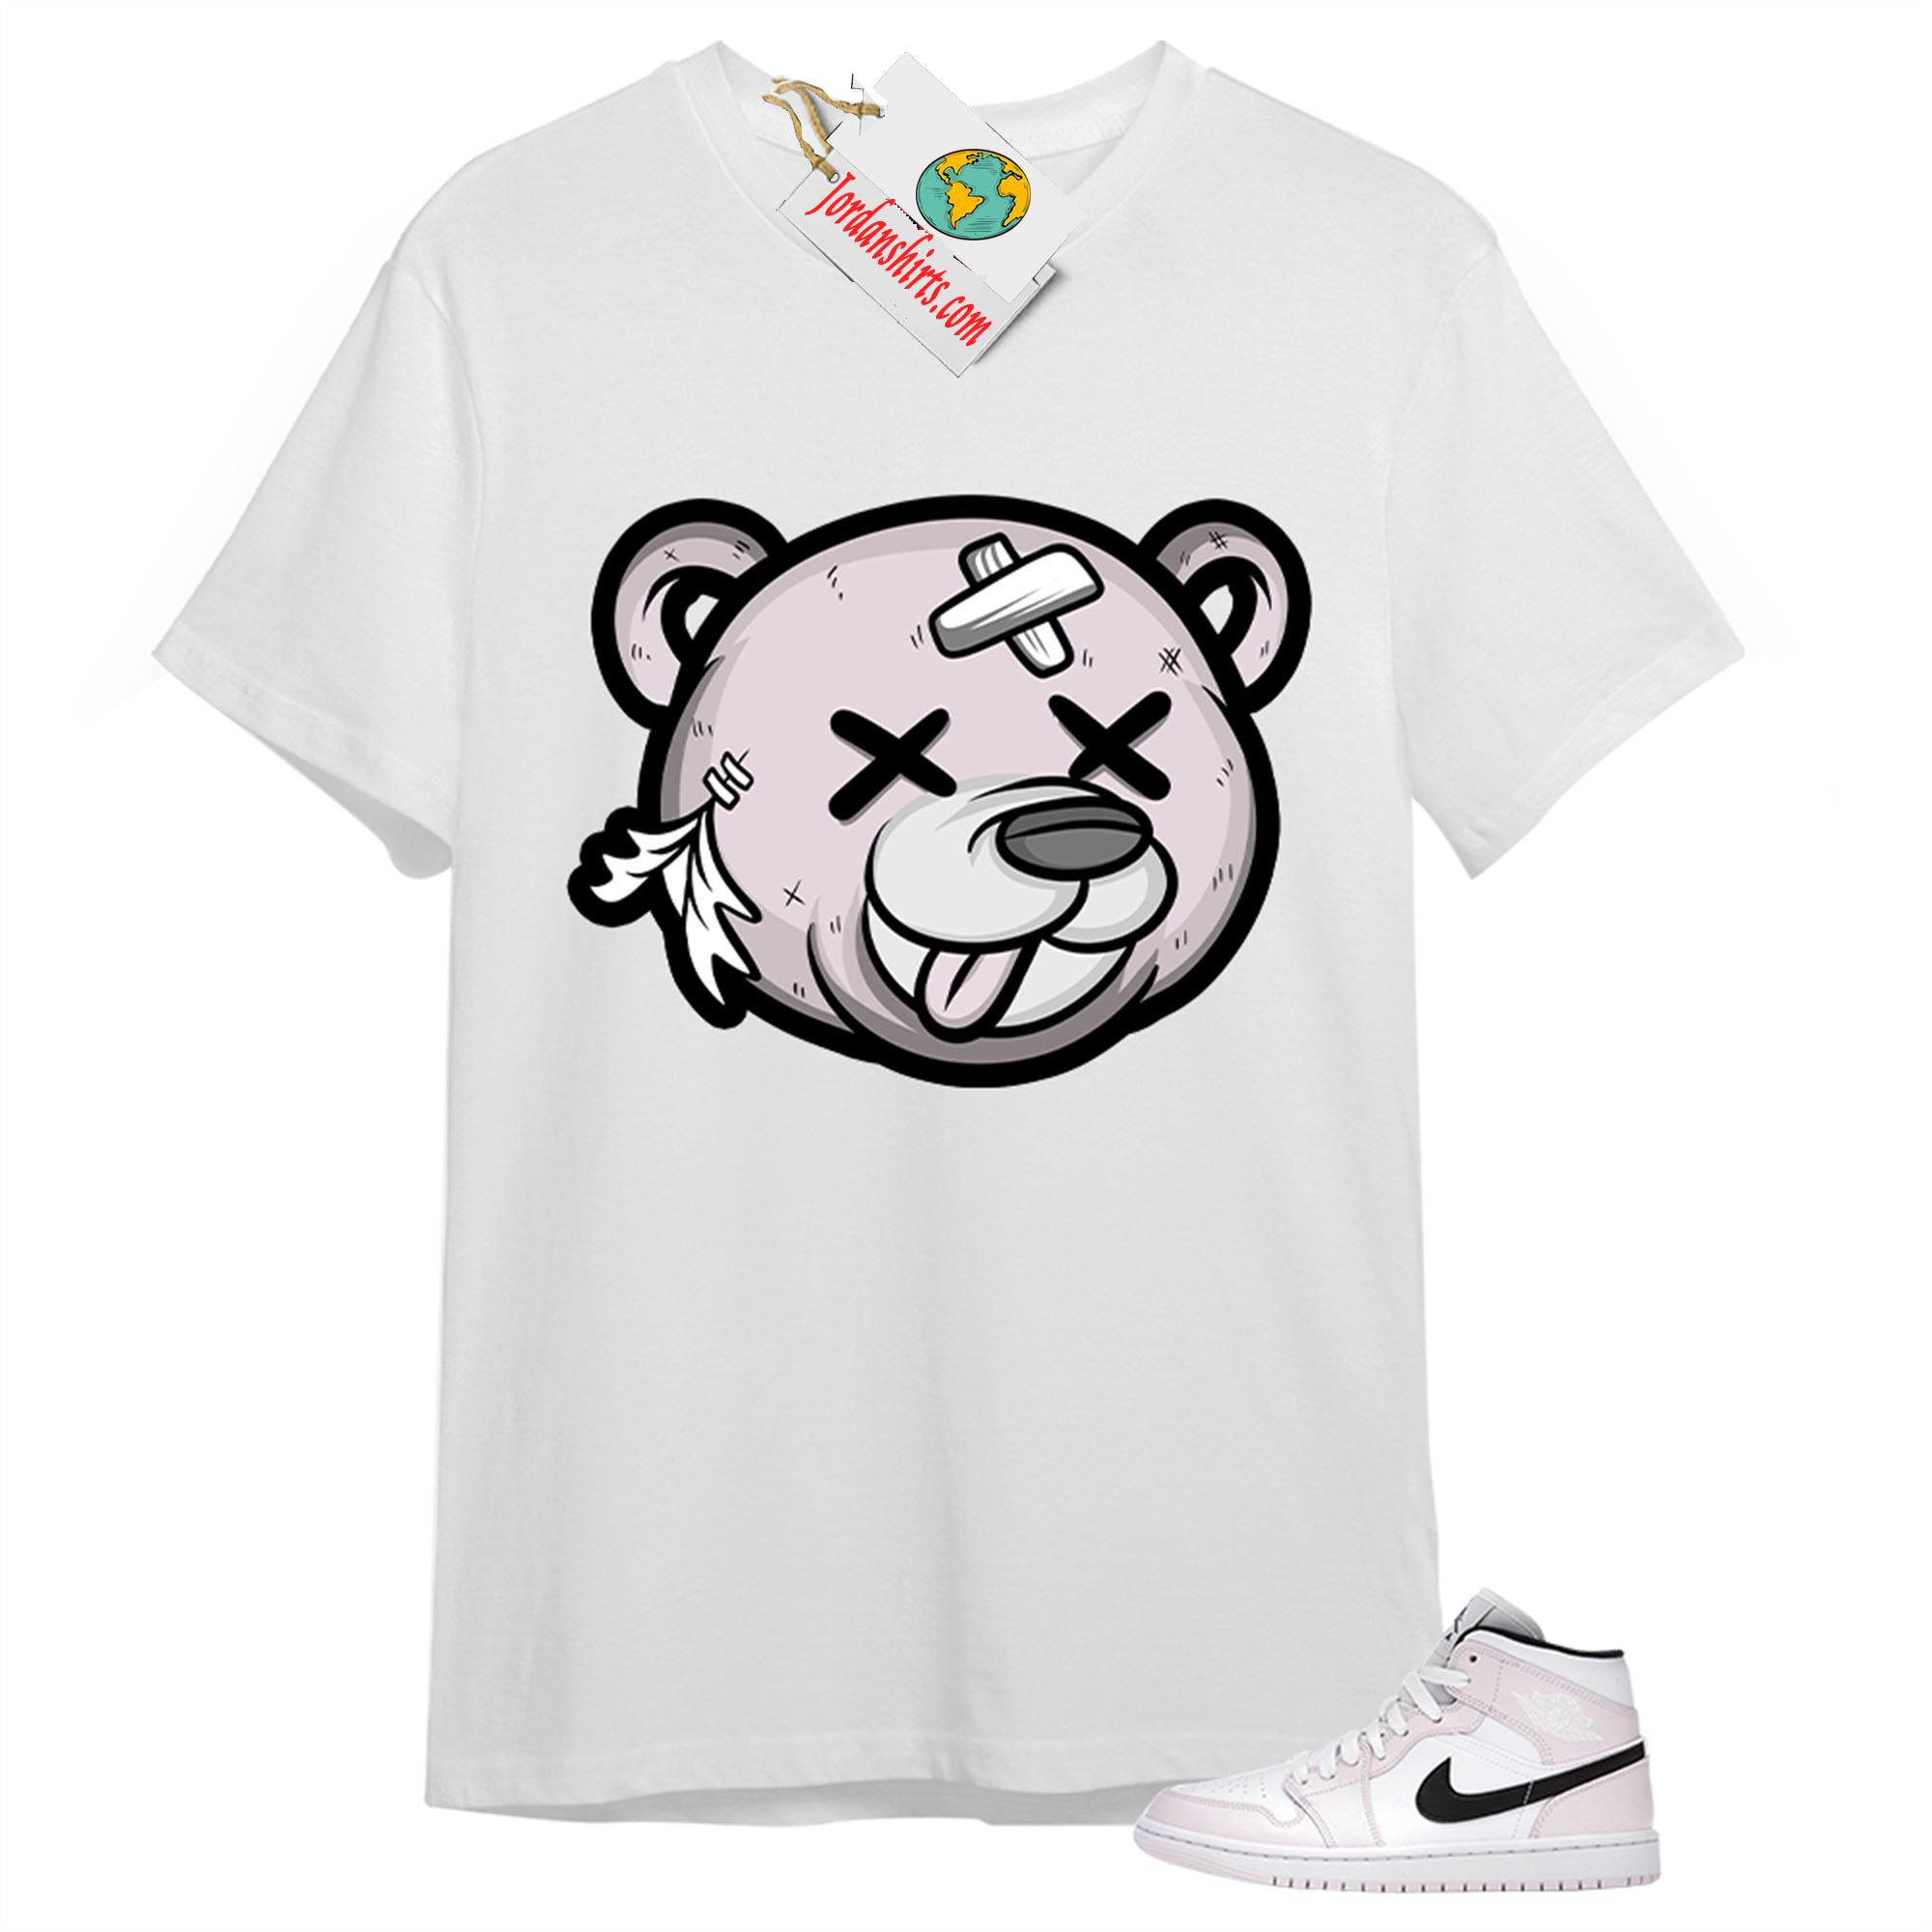 Jordan 1 Shirt, Teddy Bear Head White T-shirt Air Jordan 1 Barely Rose 1s Plus Size Up To 5xl